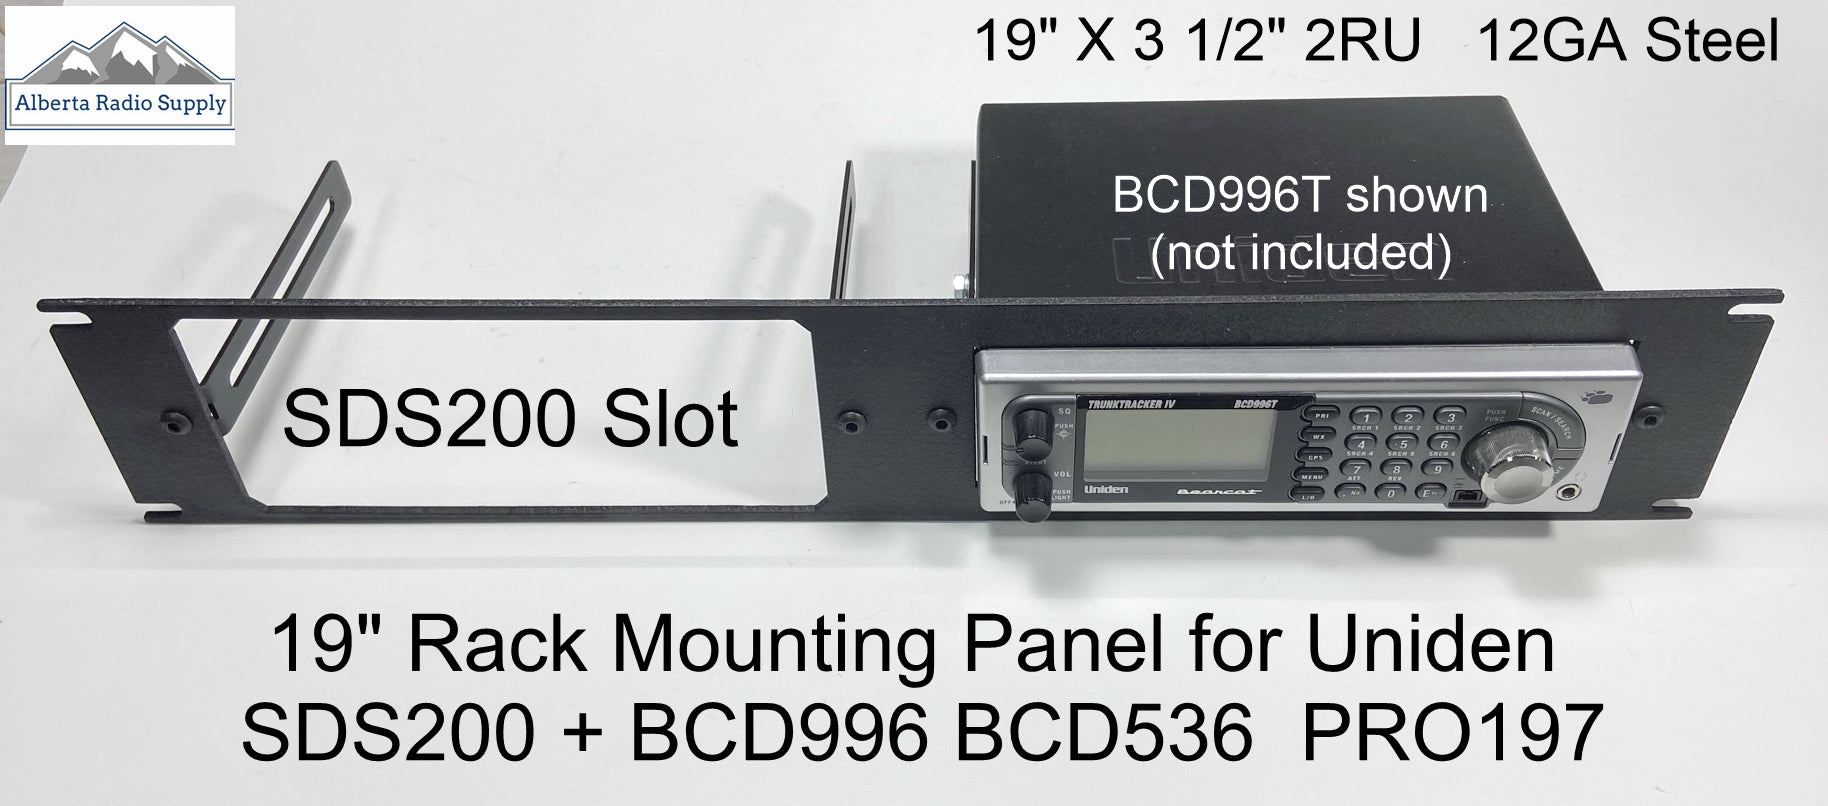 Rack Mount for Uniden SDS200 and BCD996T